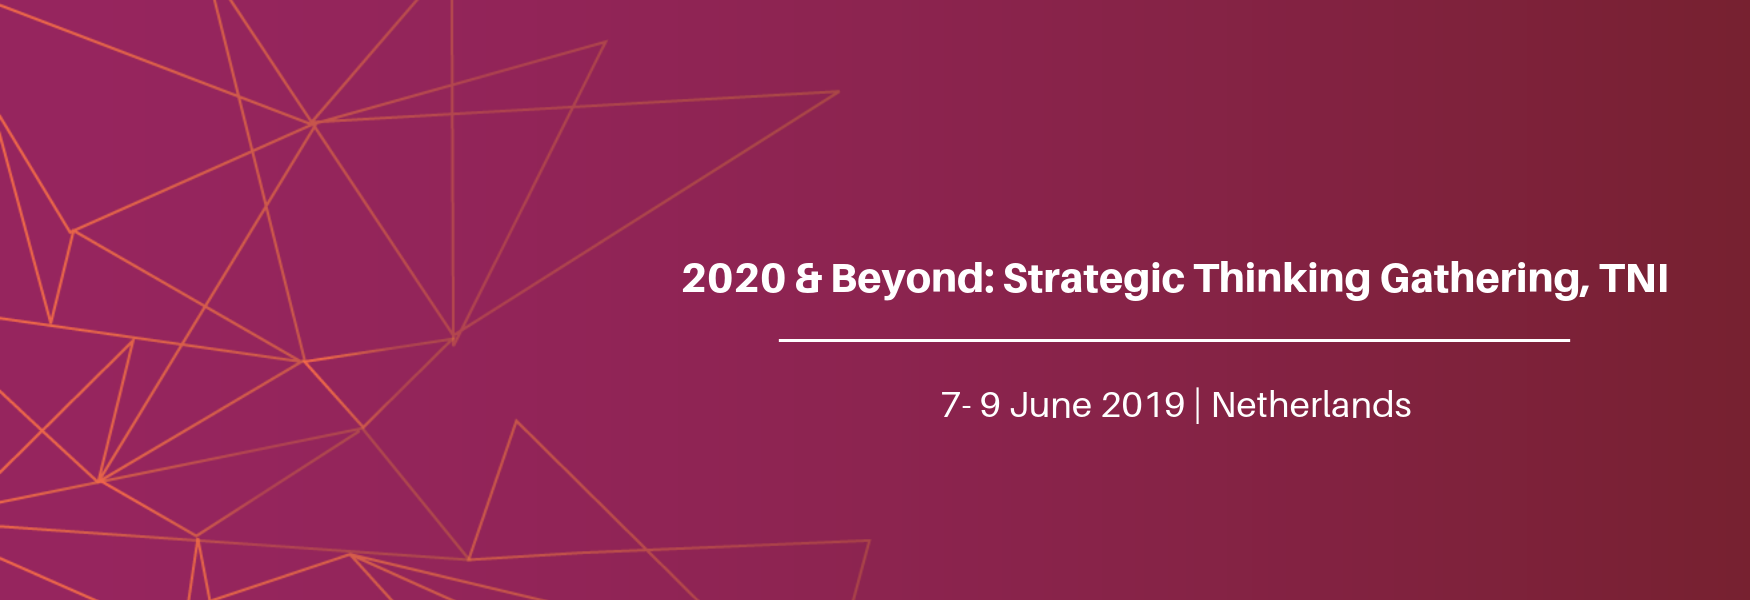 2020 & Beyond: Strategic Thinking Gathering